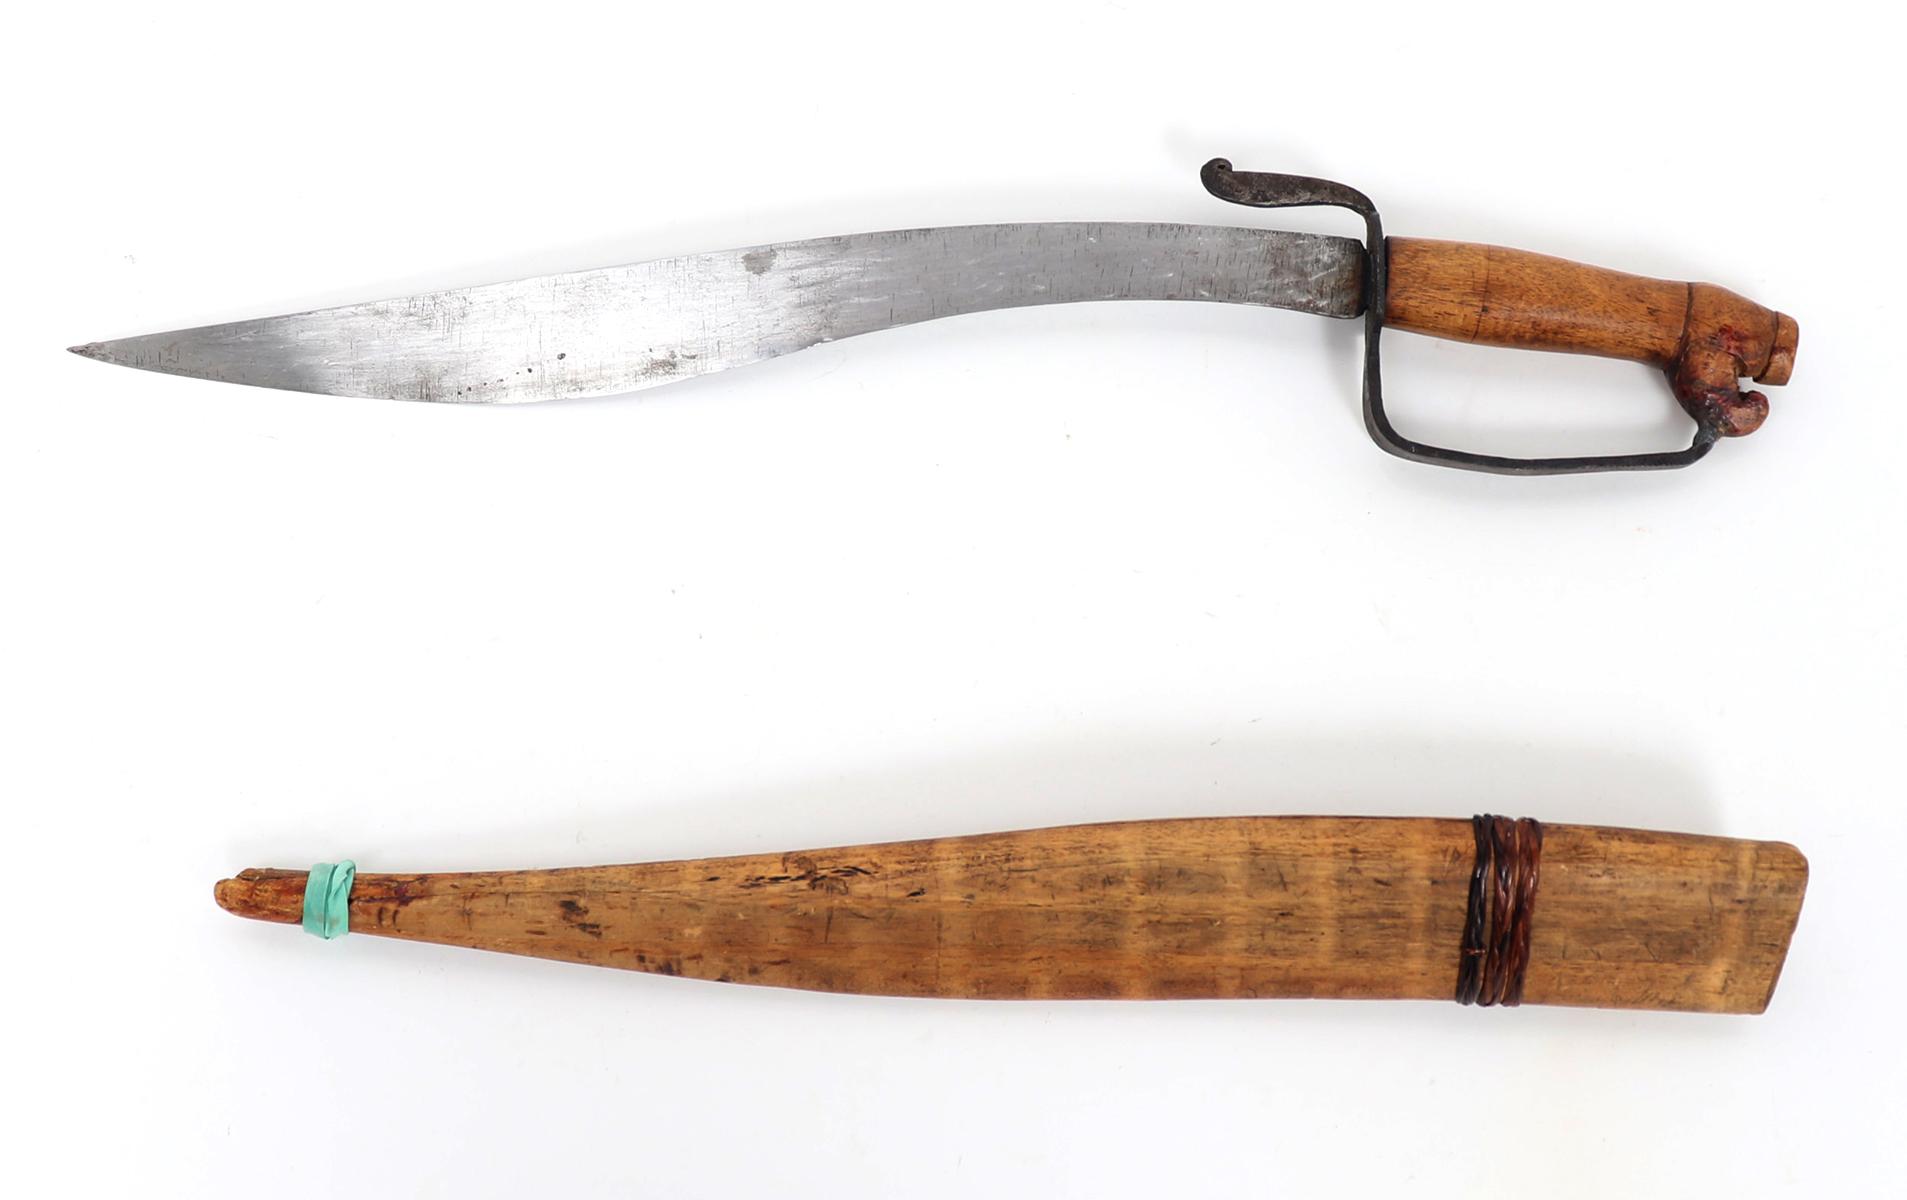 Philippines Sword with Scabbard, Circa 1900-1940s